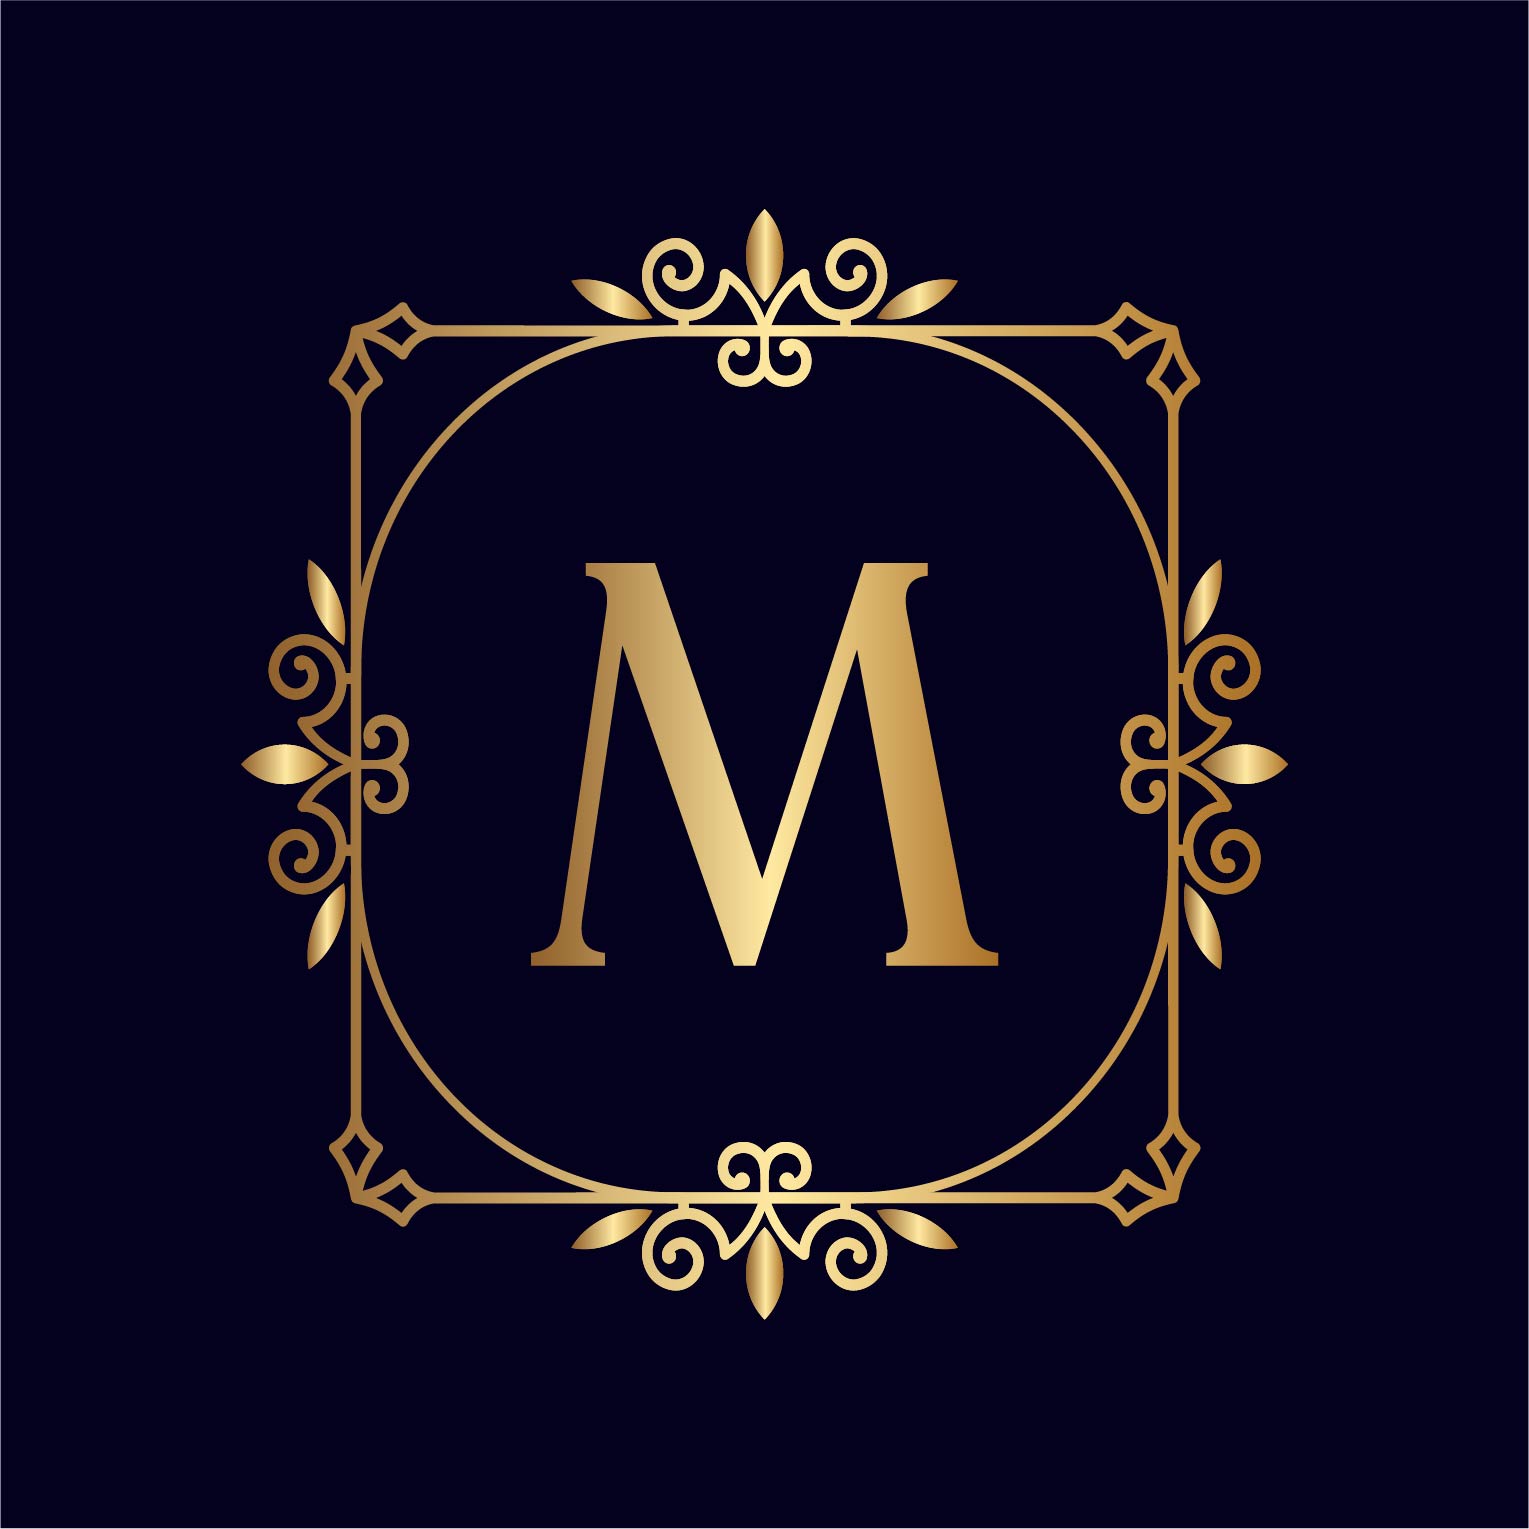 Artistic Gold Letter M Logos Design preview image.